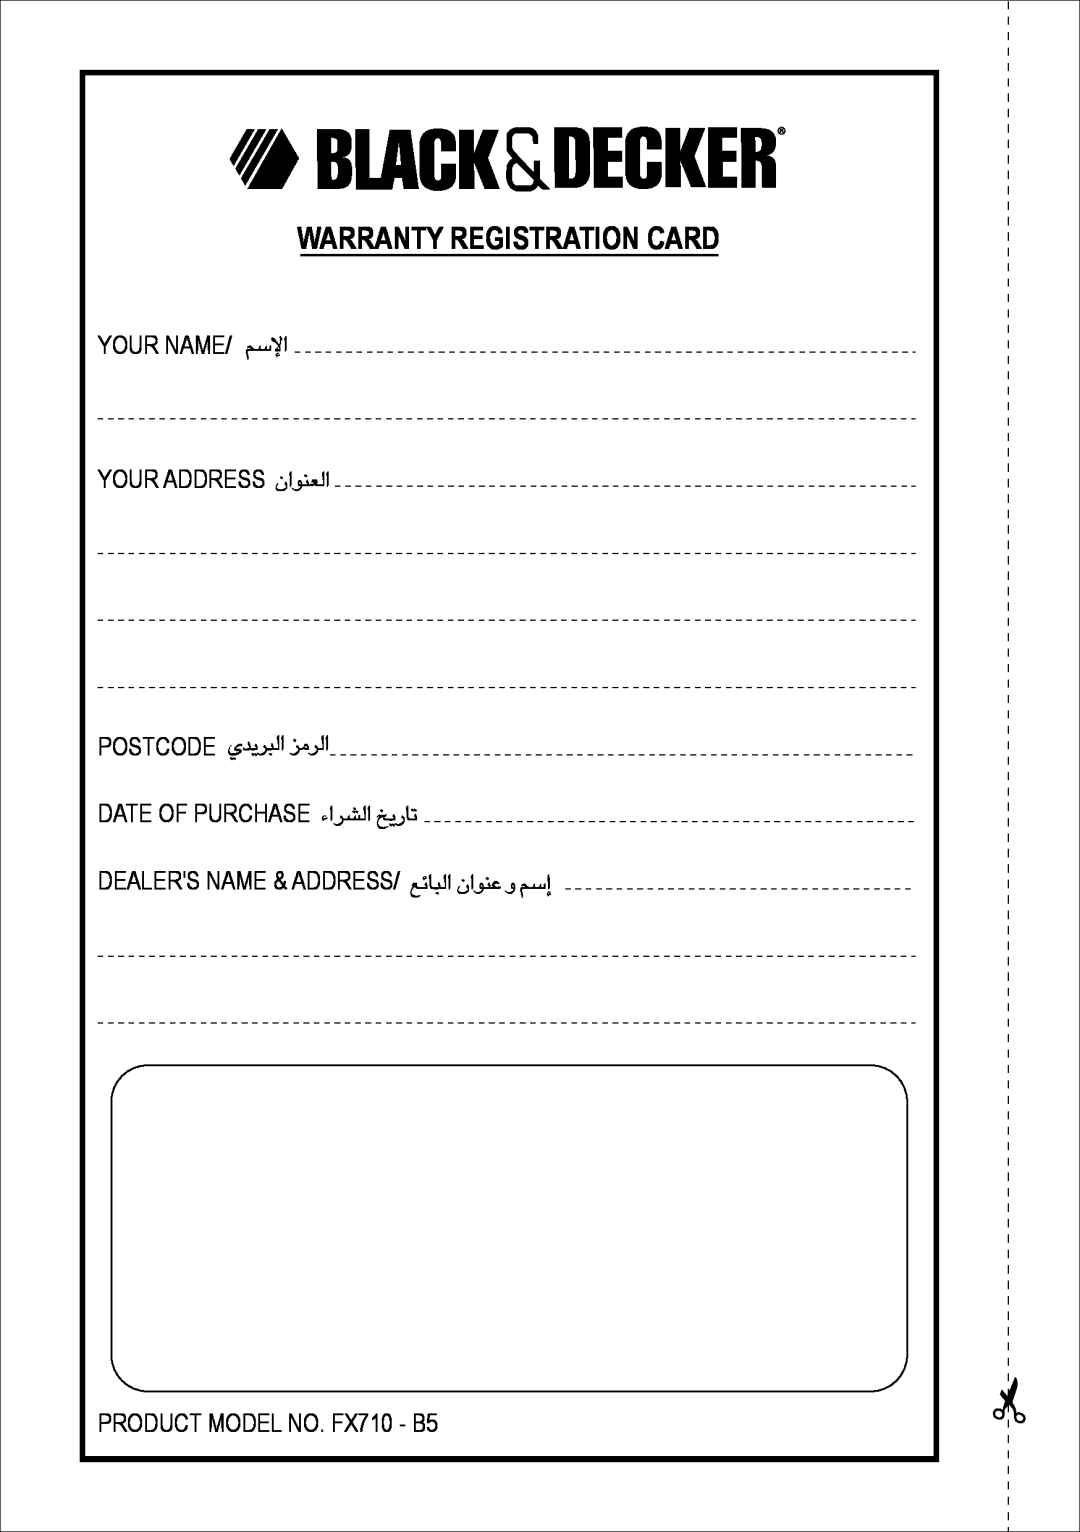 Black & Decker FX710 - B5 Warranty Registration Card, Your Name, «ùßr, Your Address, «∞FMu«Ê, Postcode, «∞∂d¥bÍ «∞d±e 